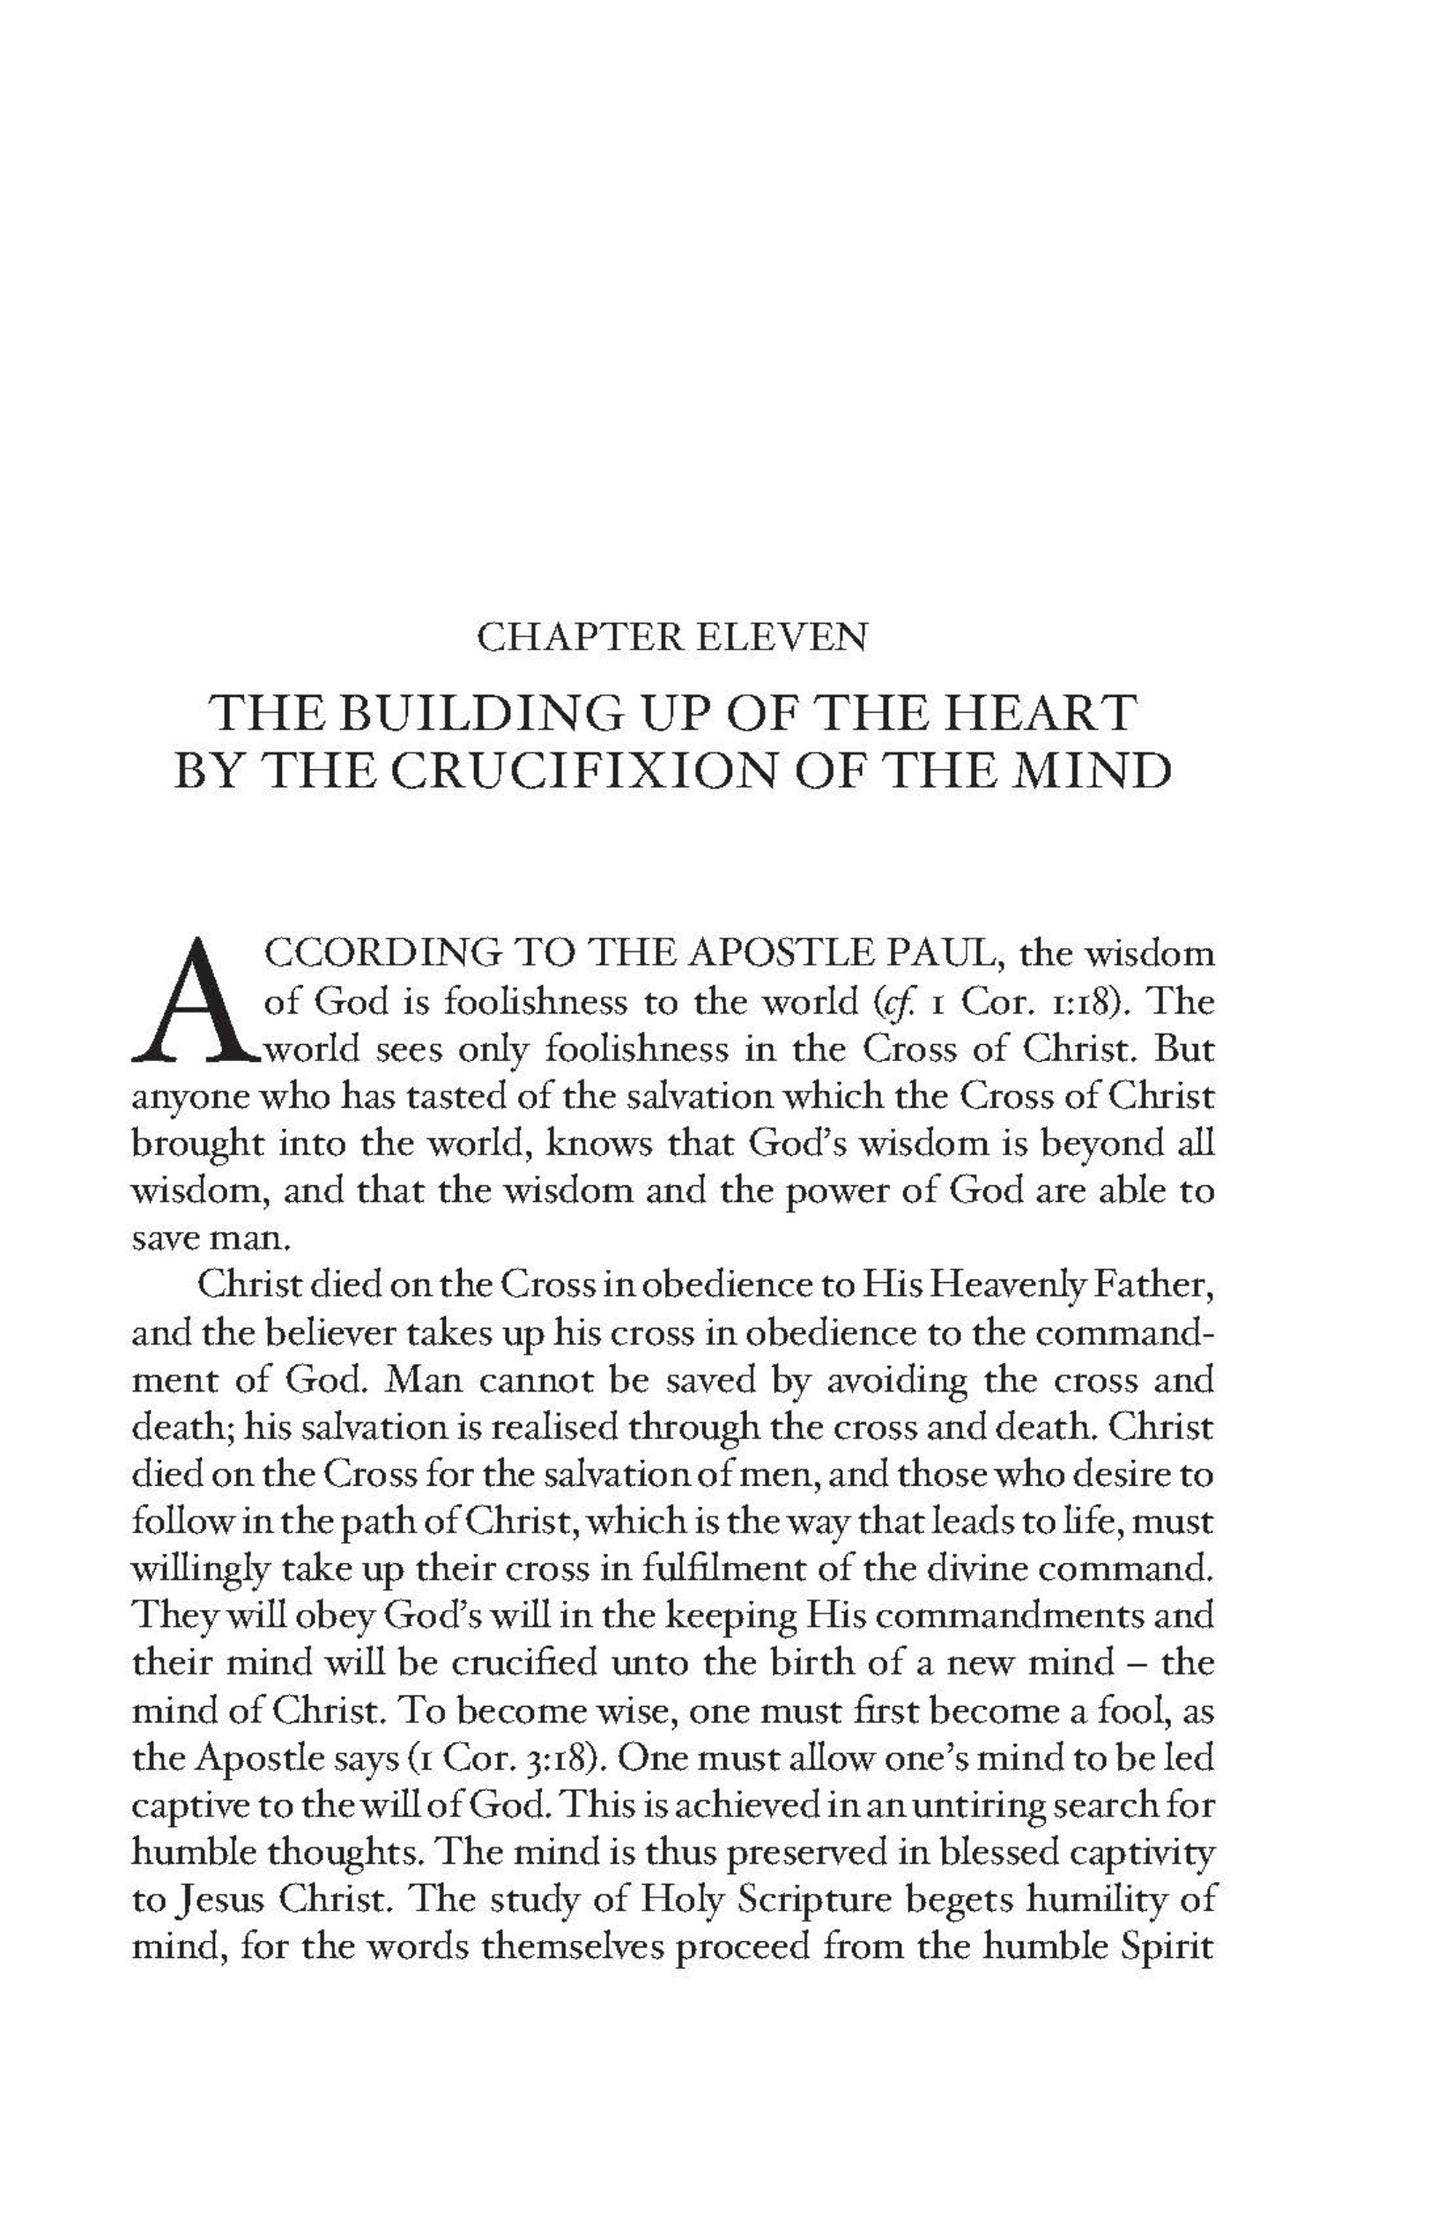 The Hidden Man of the Heart, by Archimandrite Zacharias